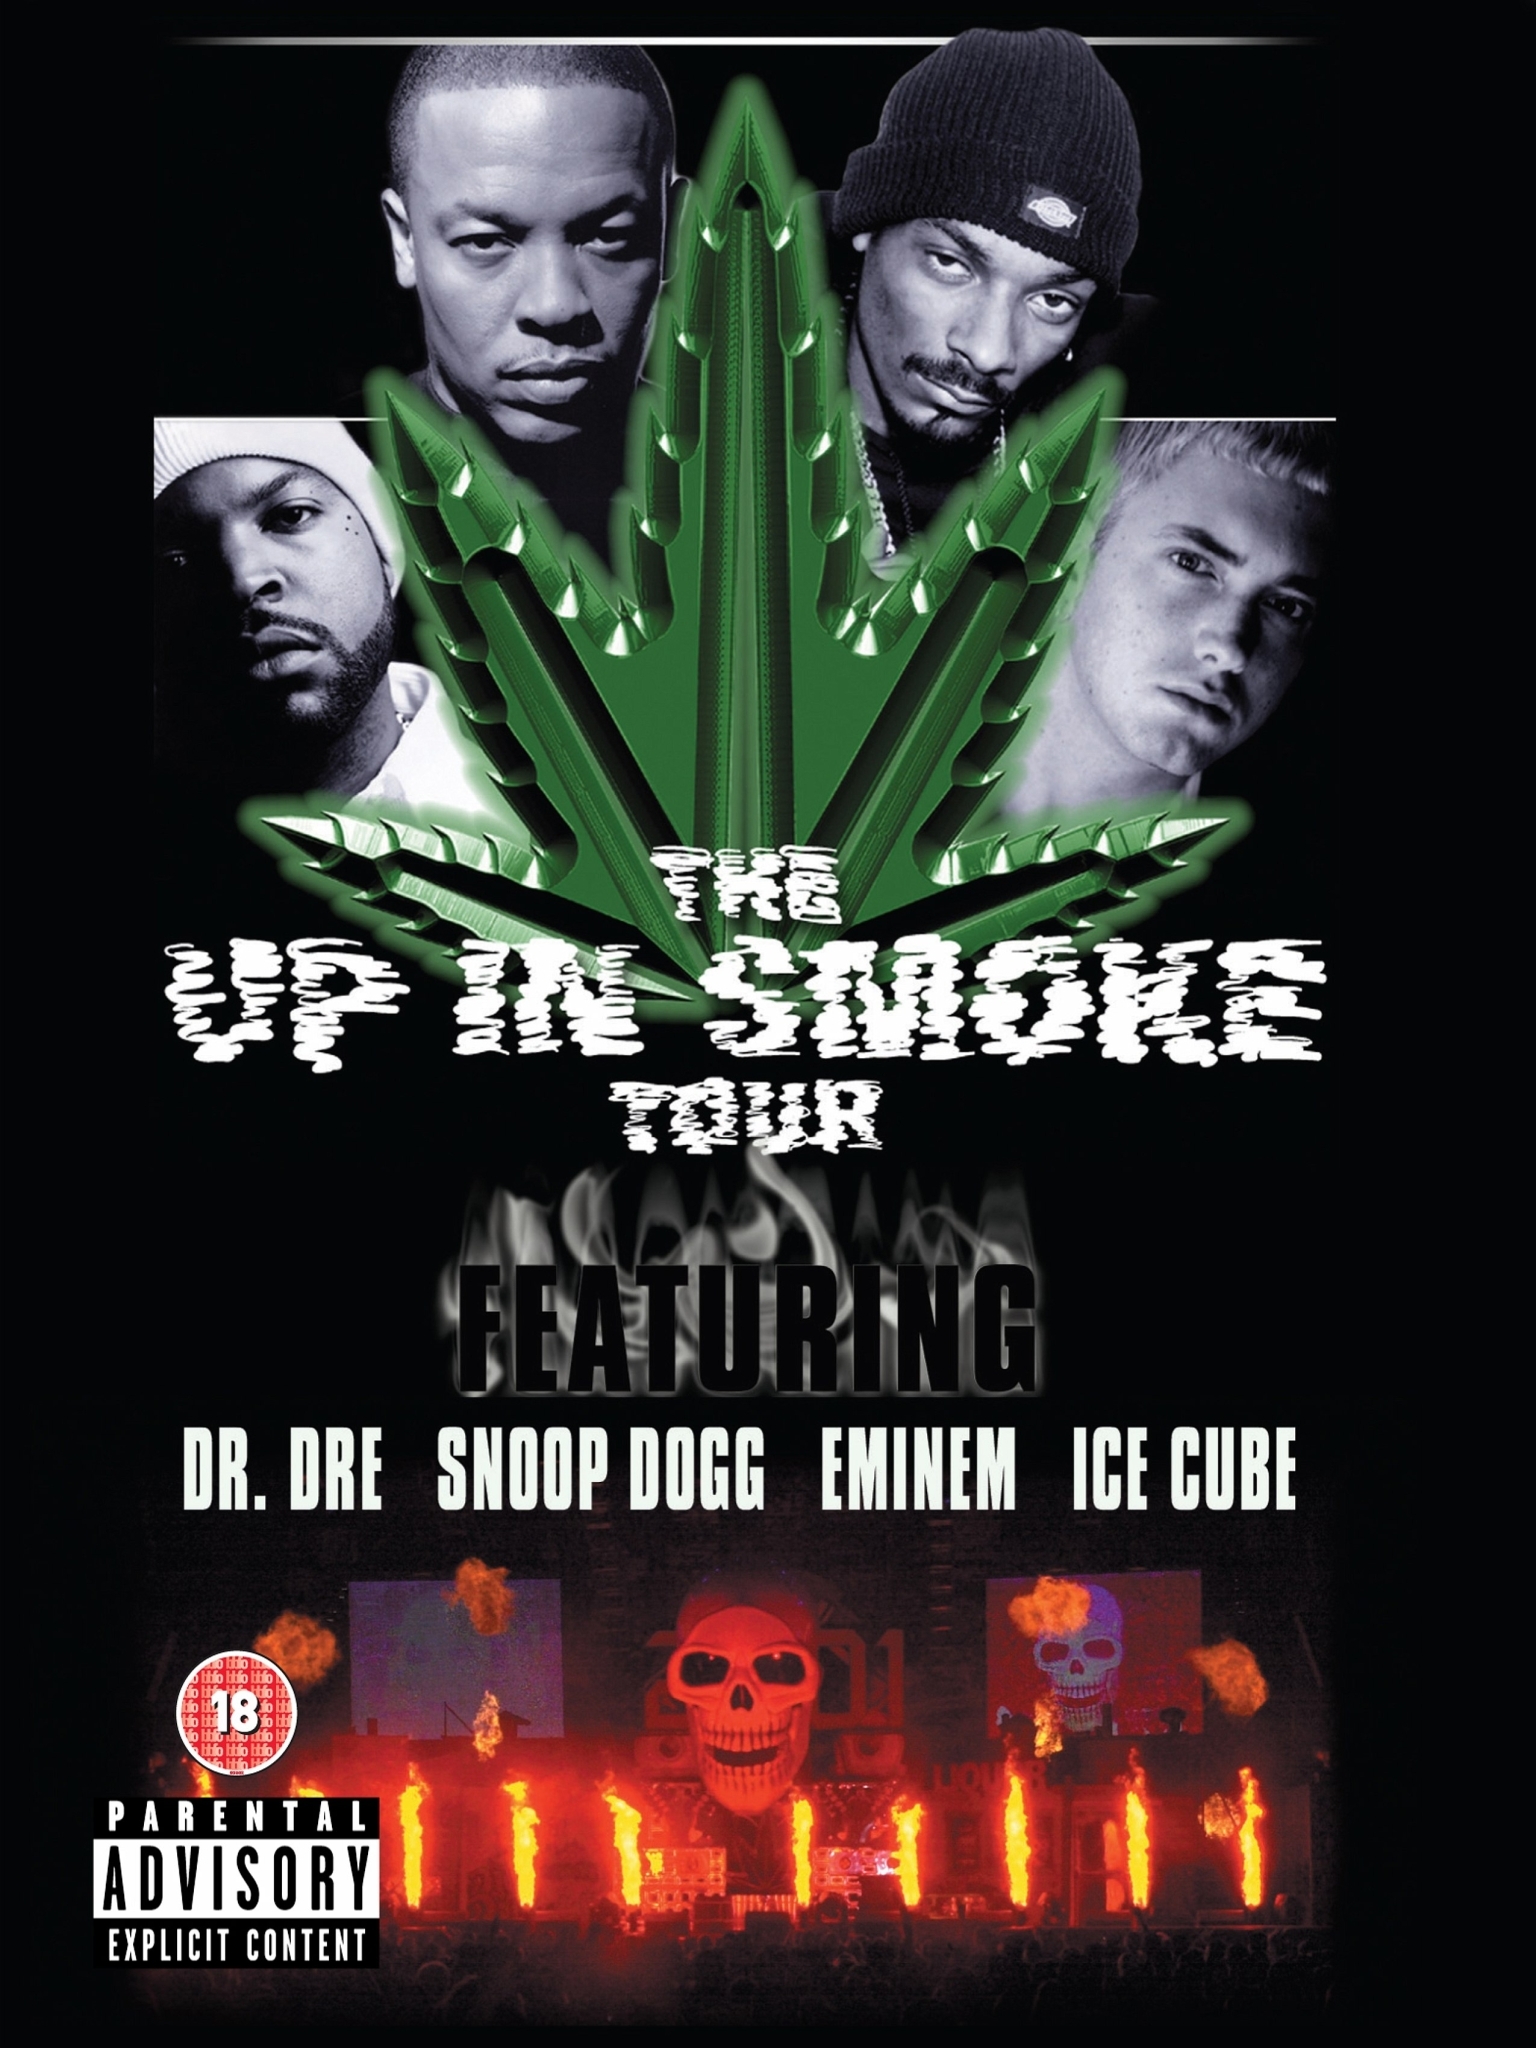 The Up In Smoke Tour (2000)(EN)[DVDRip] = CSFD 92